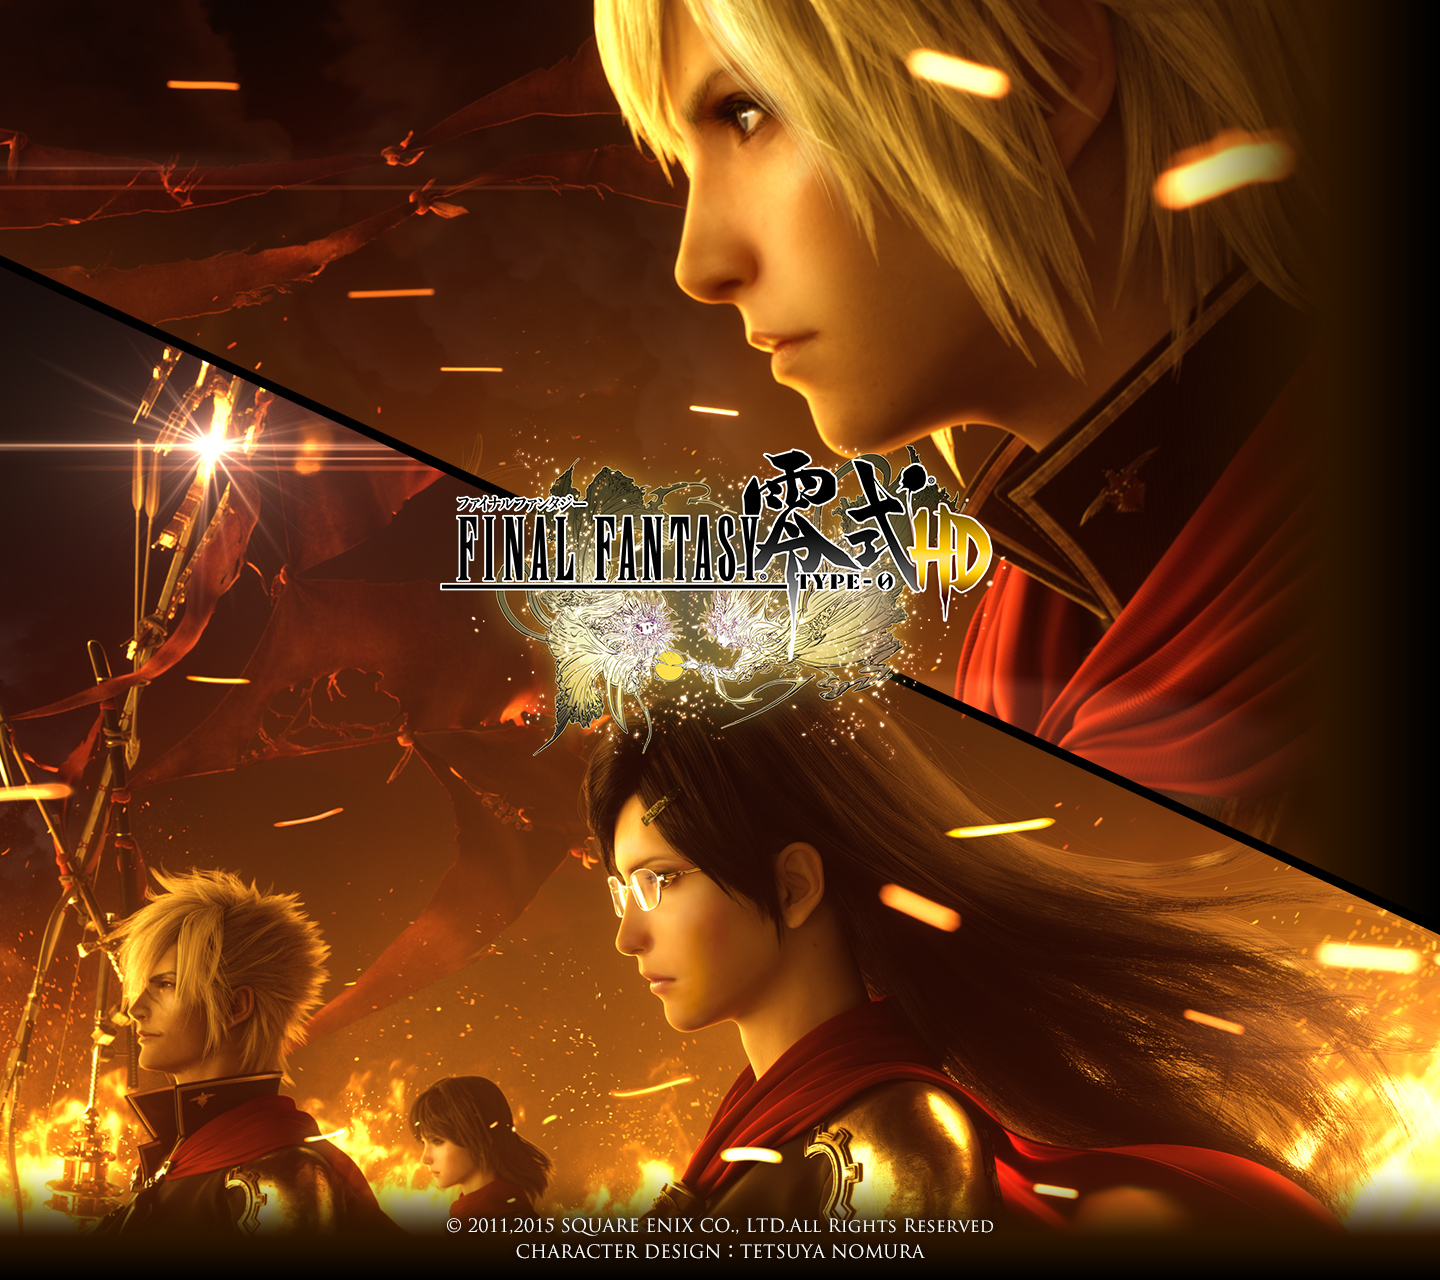 Wallpaper Final Fantasy零式hd Square Enix